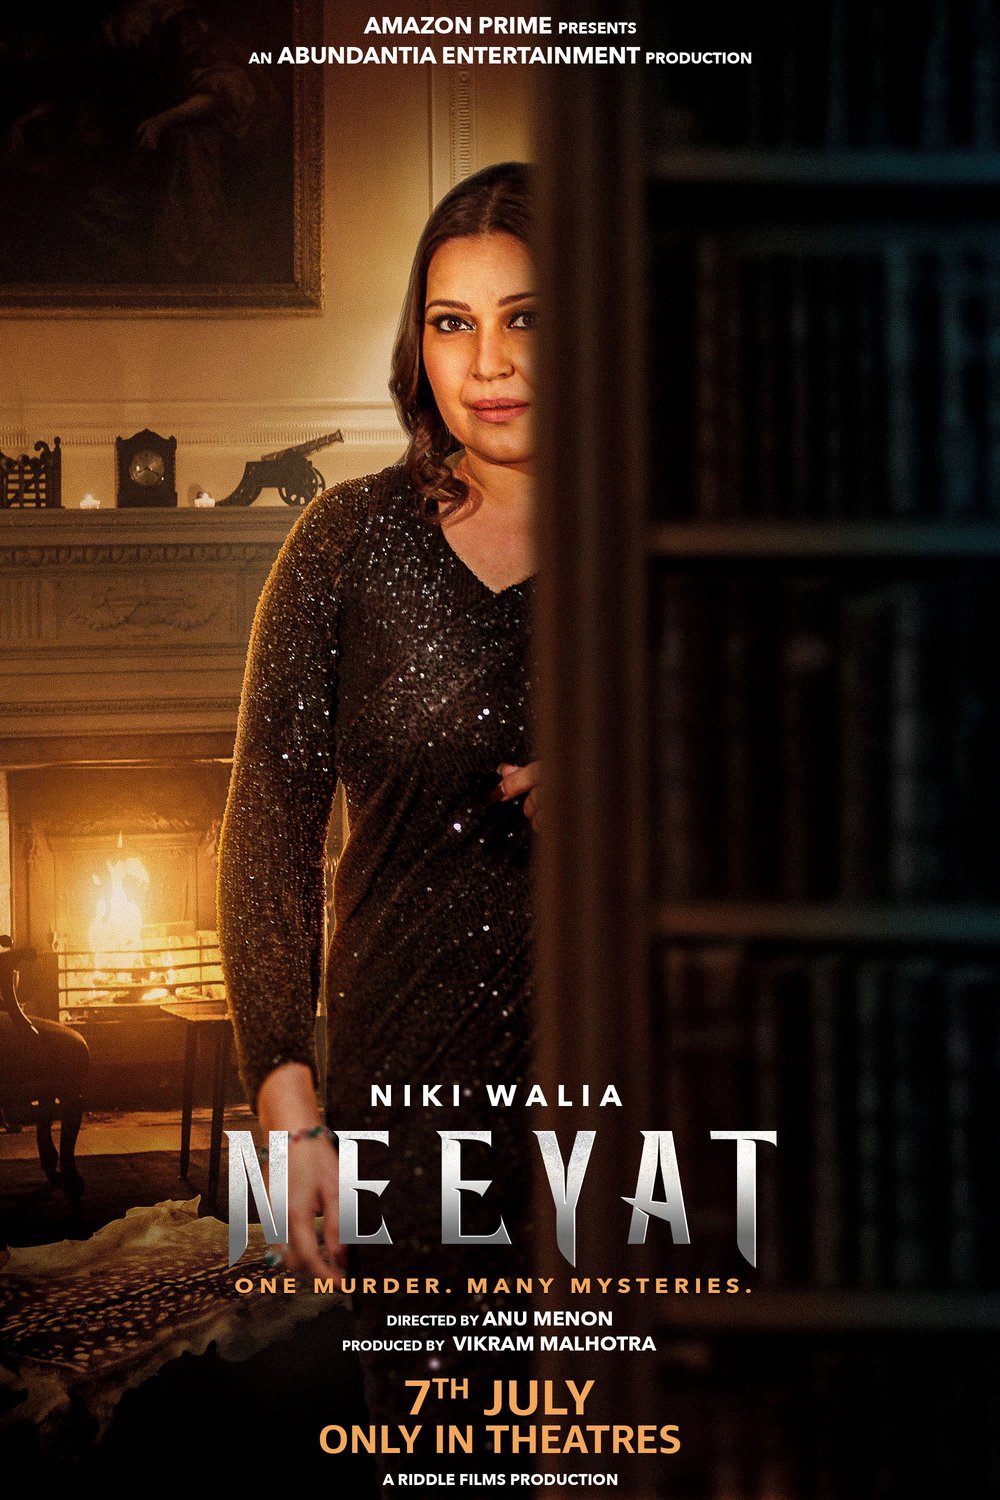 Hindi poster of the movie Neeyat